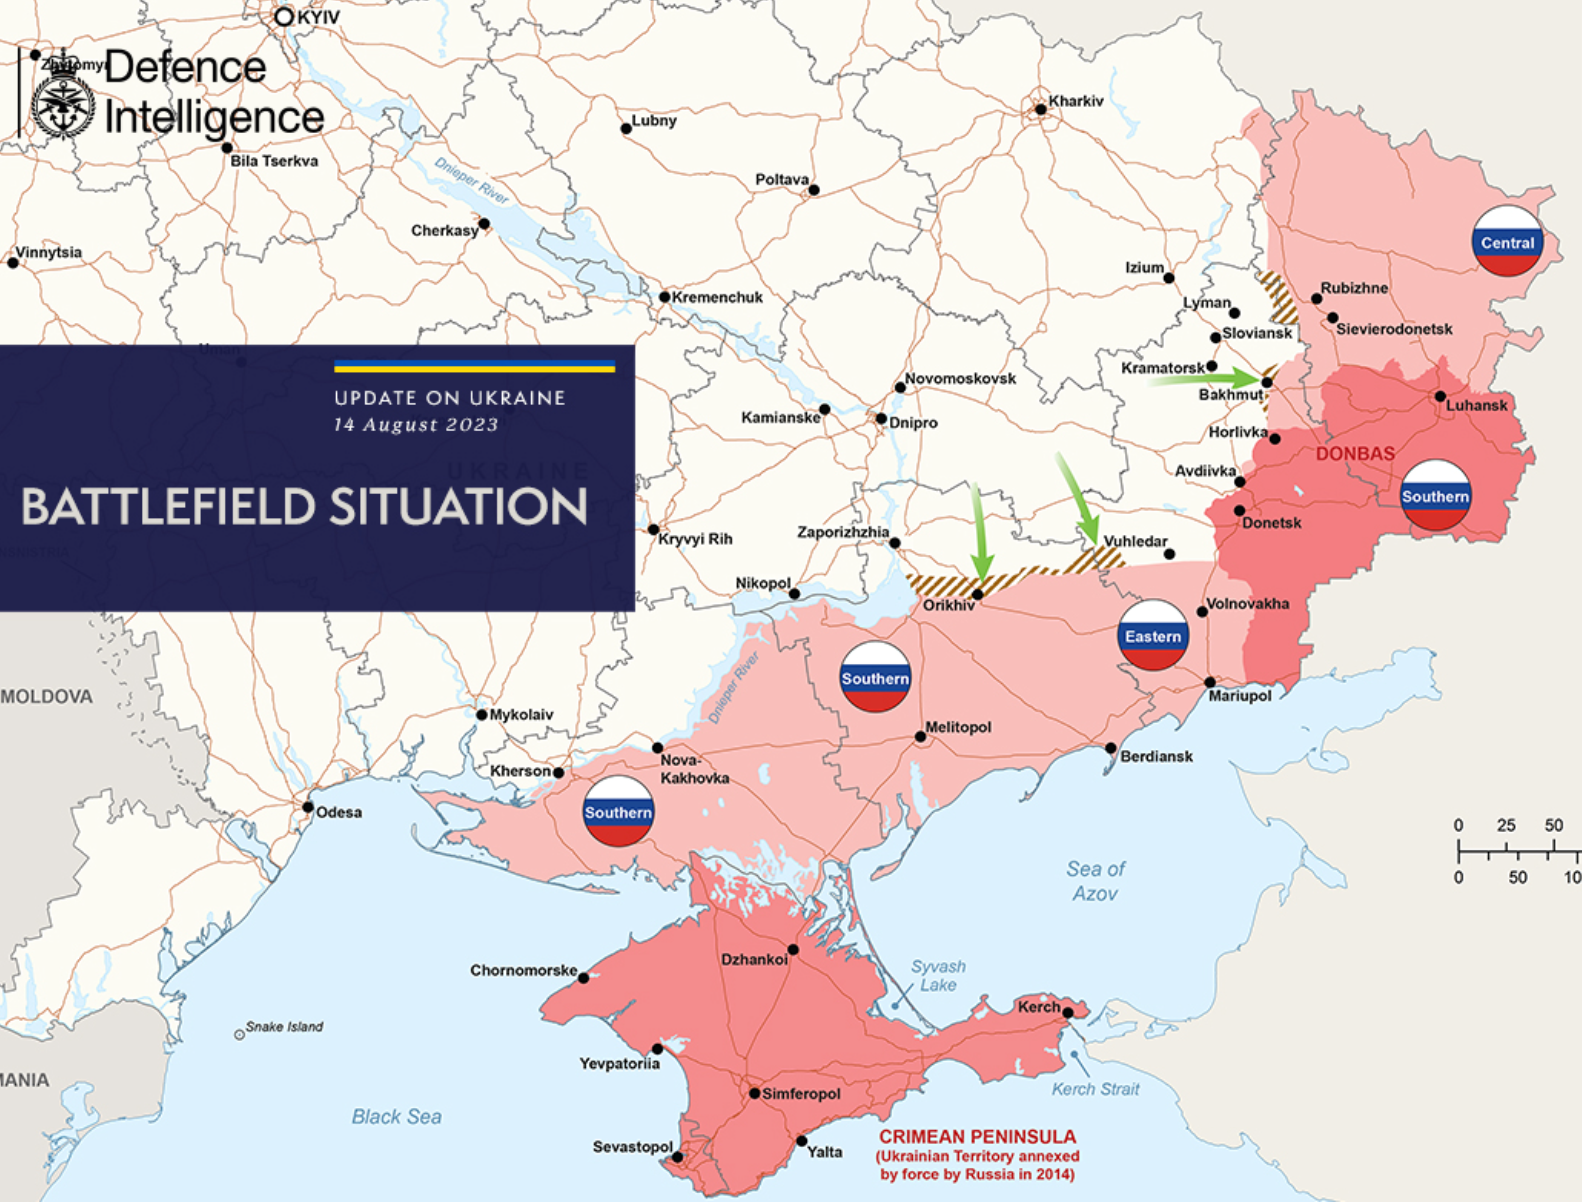 Ukraine is seeking to advance on multiple fronts across a vast area